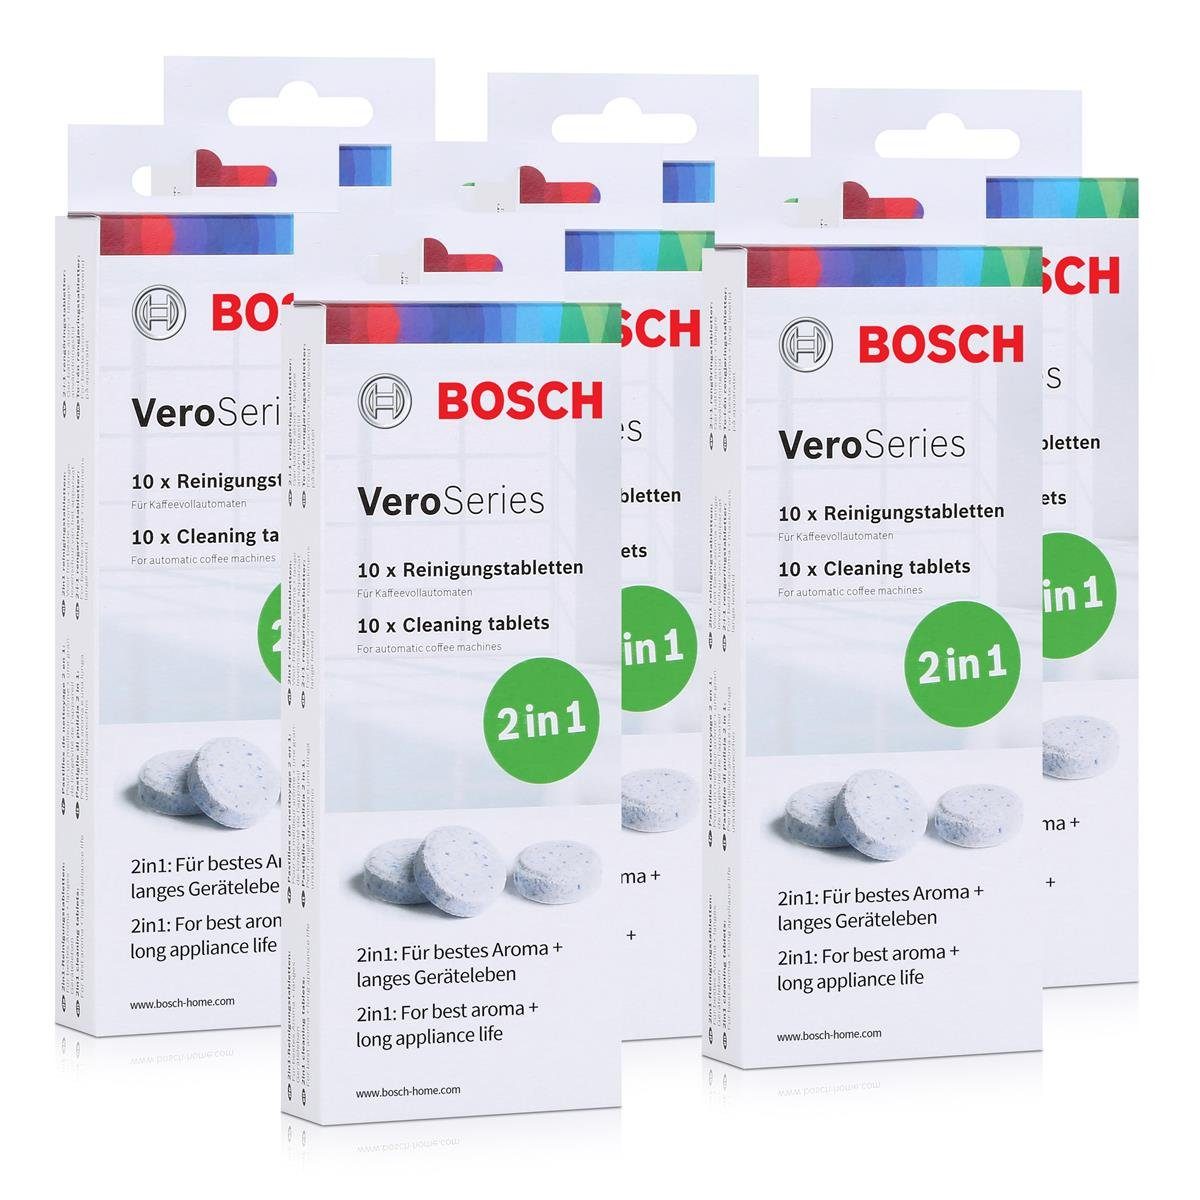 BOSCH Bosch VeroSeries TCZ8001 Reinigungstabletten 2in1 - 10 Tabletten (7er Reinigungstabletten